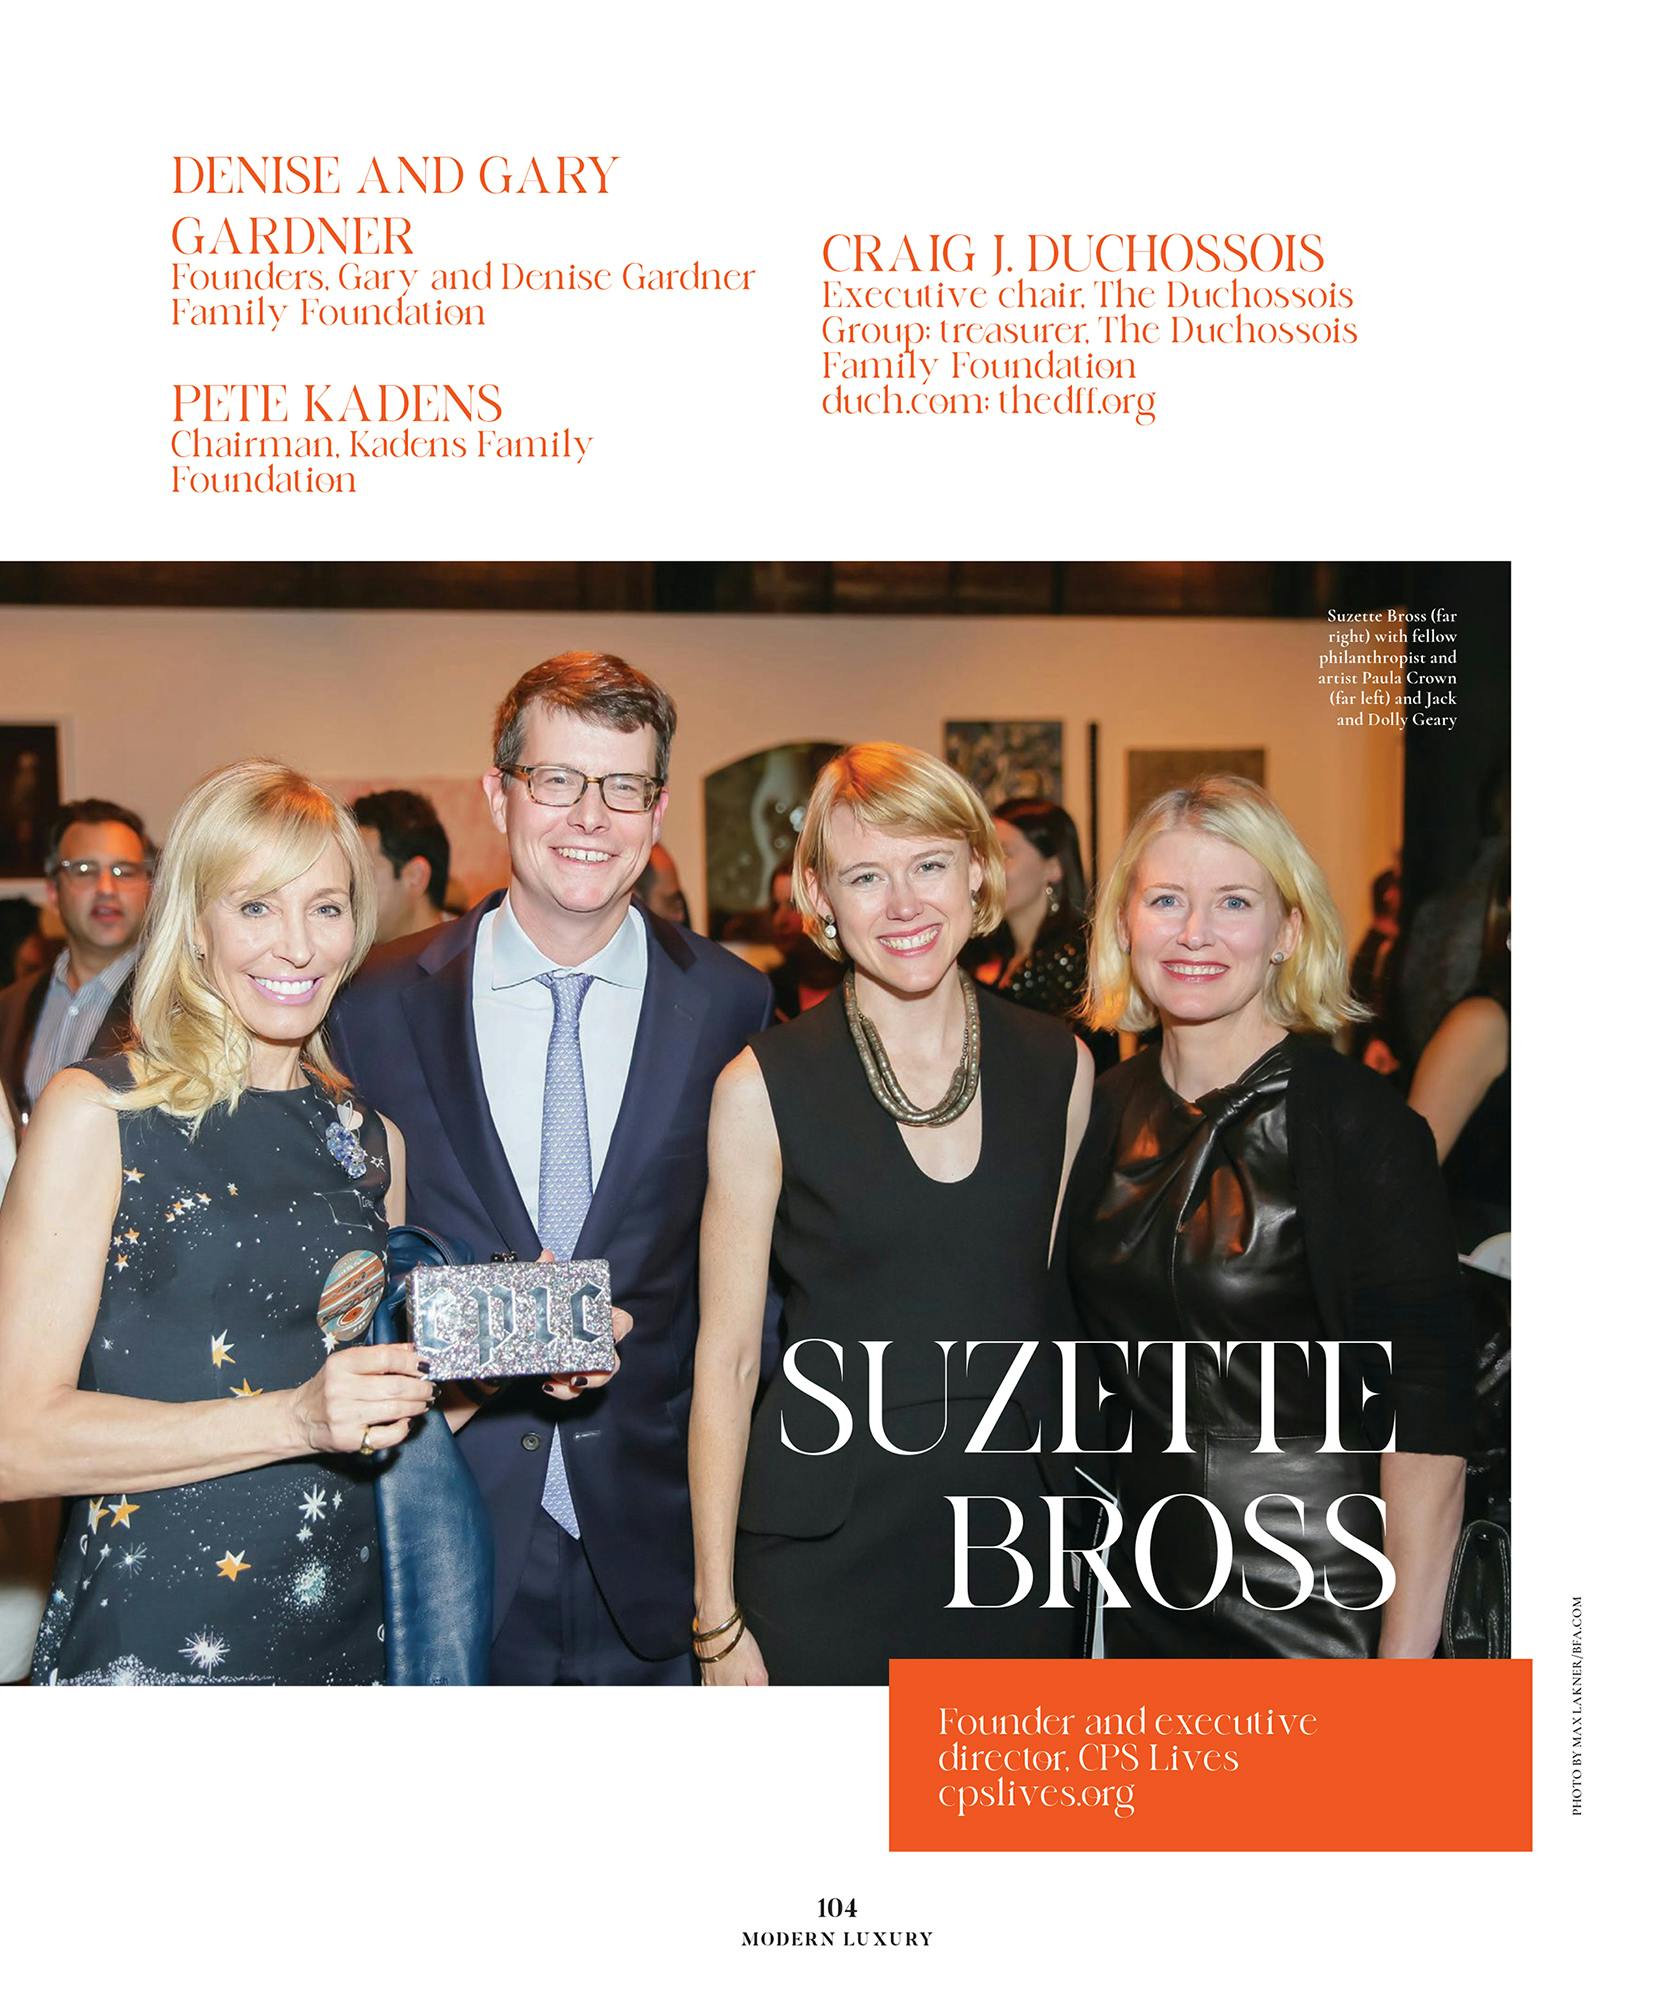 Suzette Bross, Modern luxury, cps lives, j.b. pritzker, chicago public schools